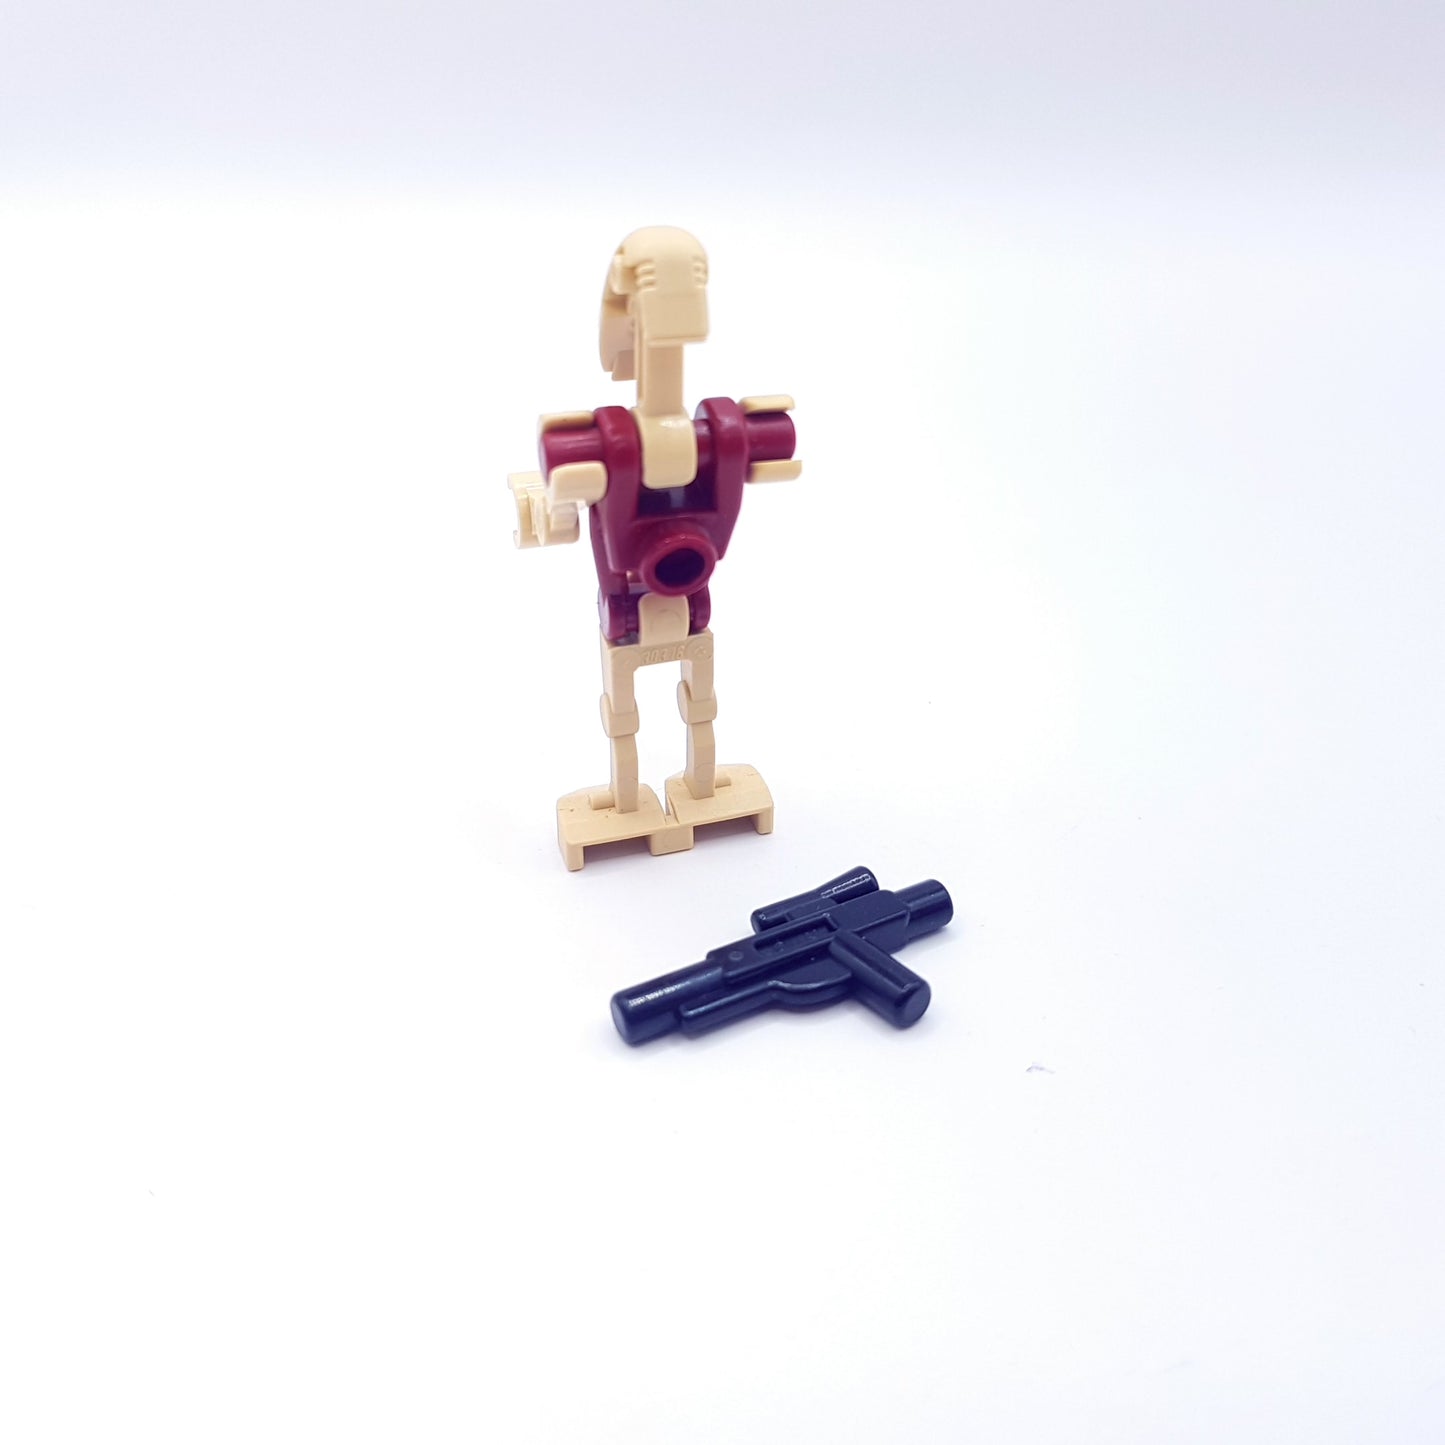 LEGO Minifigur - Battle Droide Security sw0096 (2007) - Star Wars - gebraucht